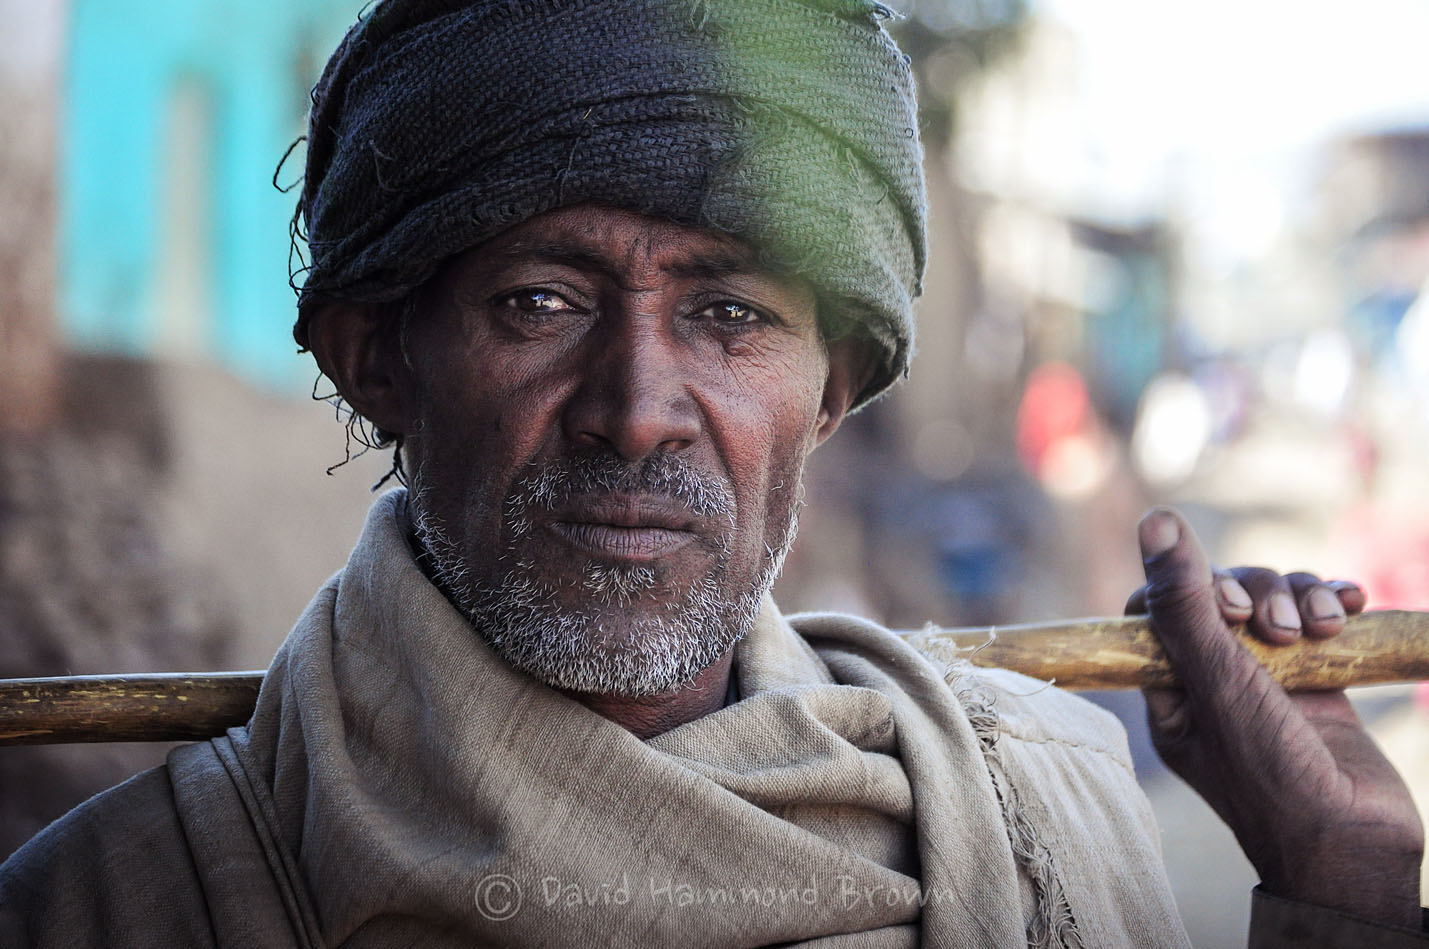 David Hammond Brown Photography - Ethiopian Portrait